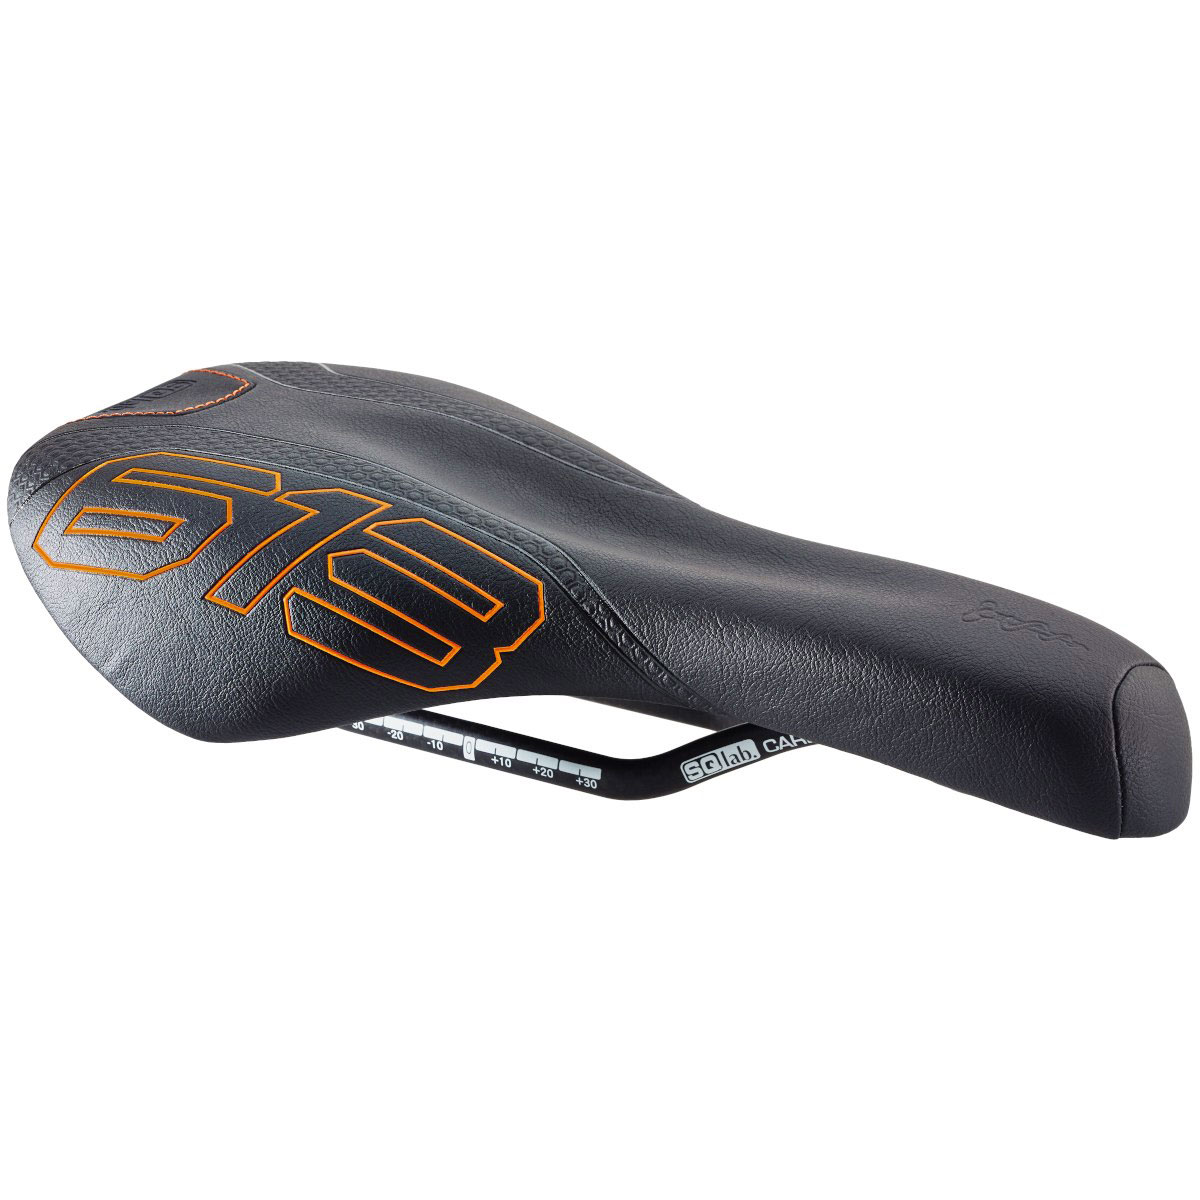 Productfoto van SQlab 613 TRI Carbon Triathlon Saddle - black